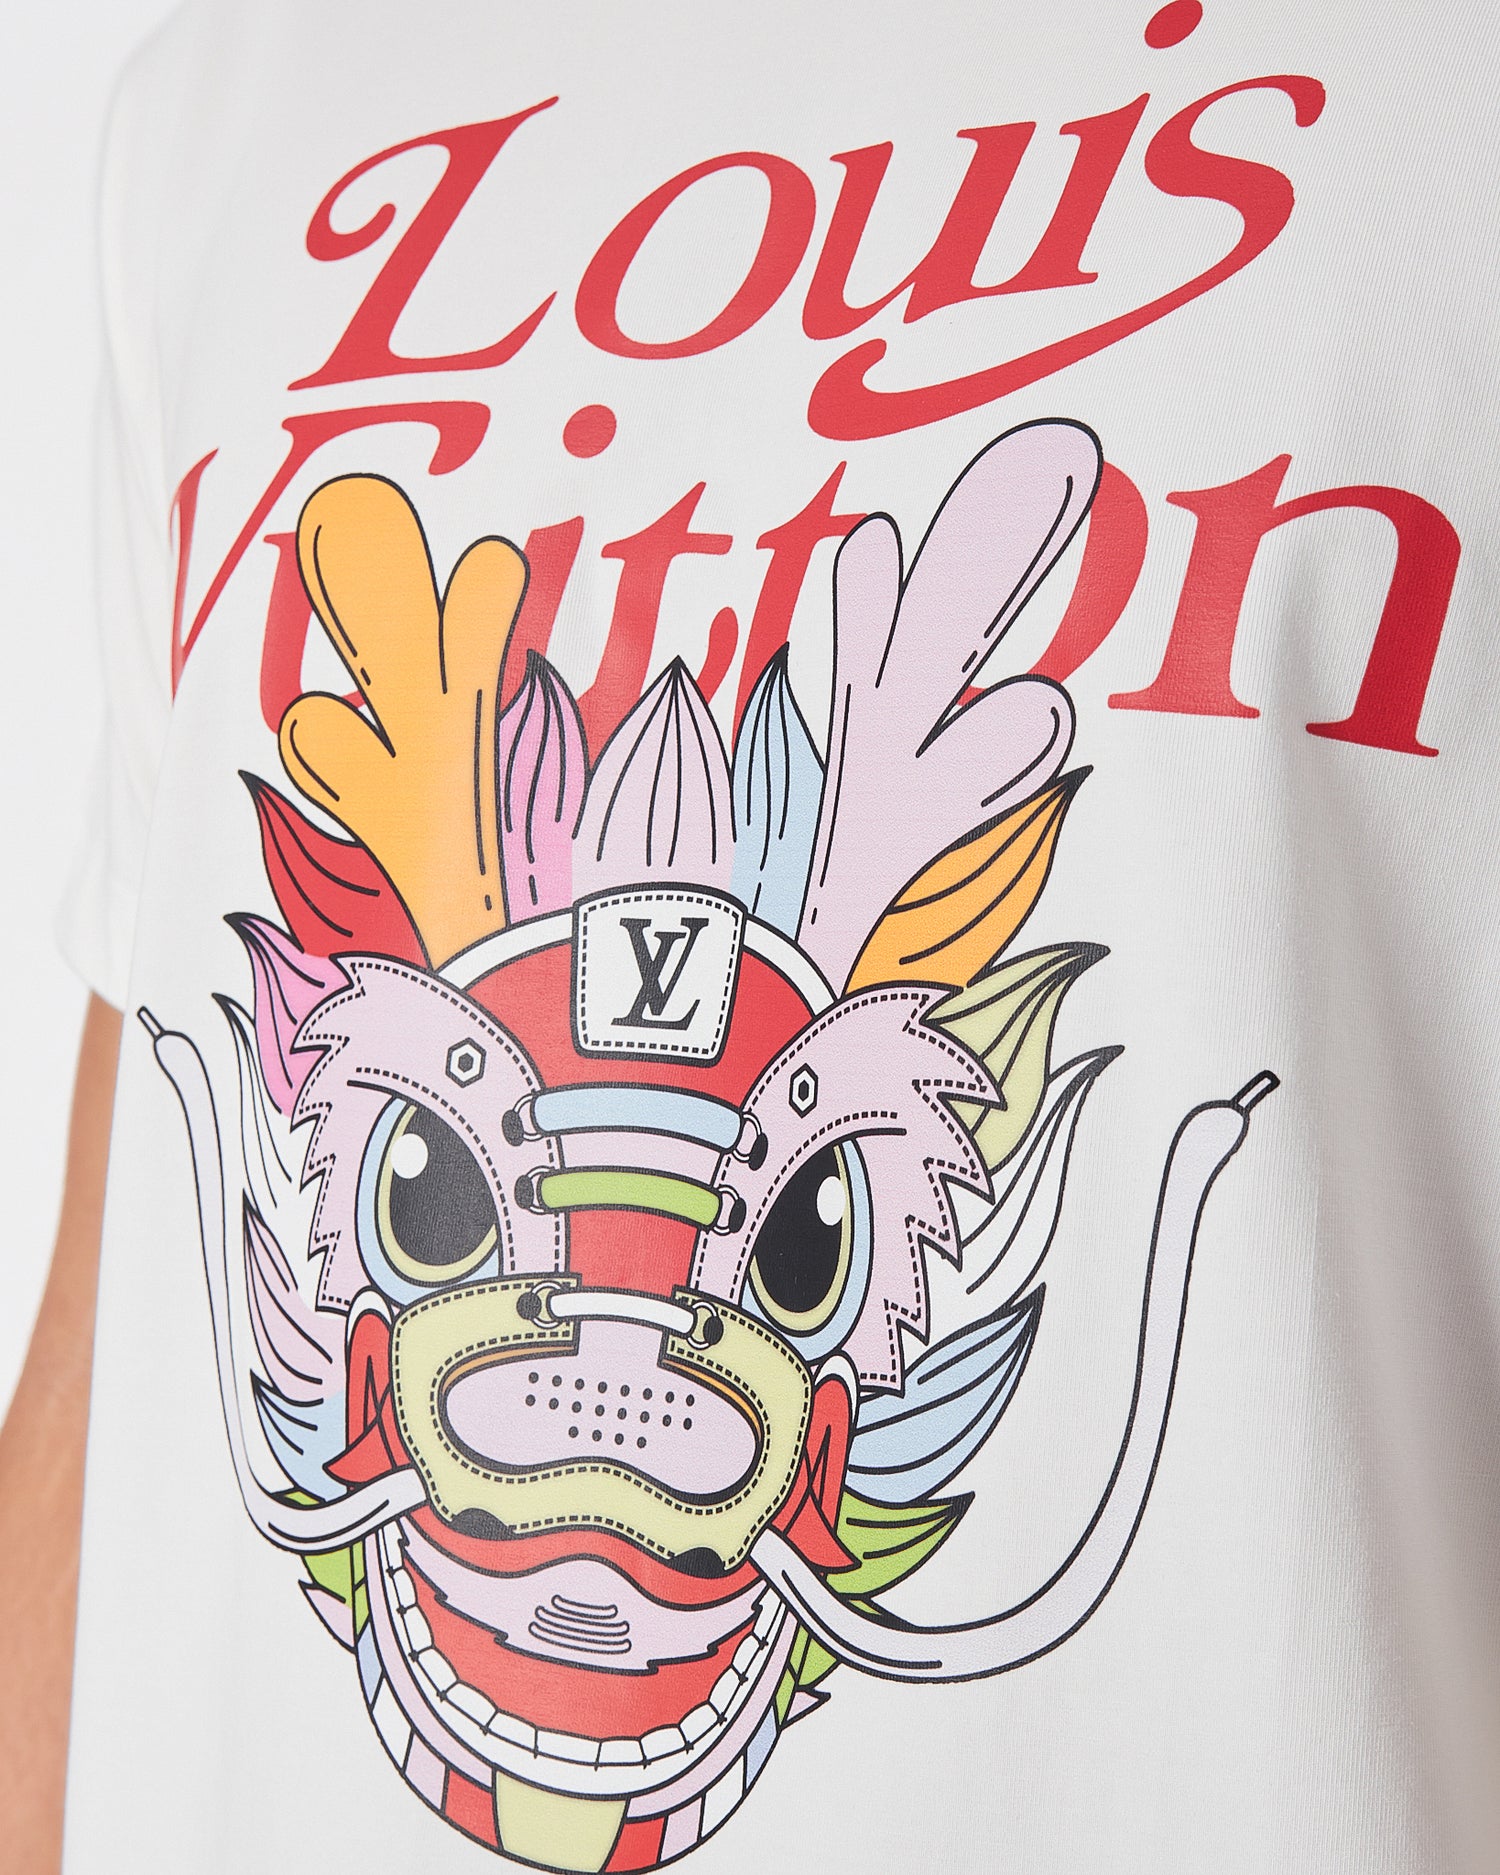 LV Dragon Printed Men White T-Shirt 17.90